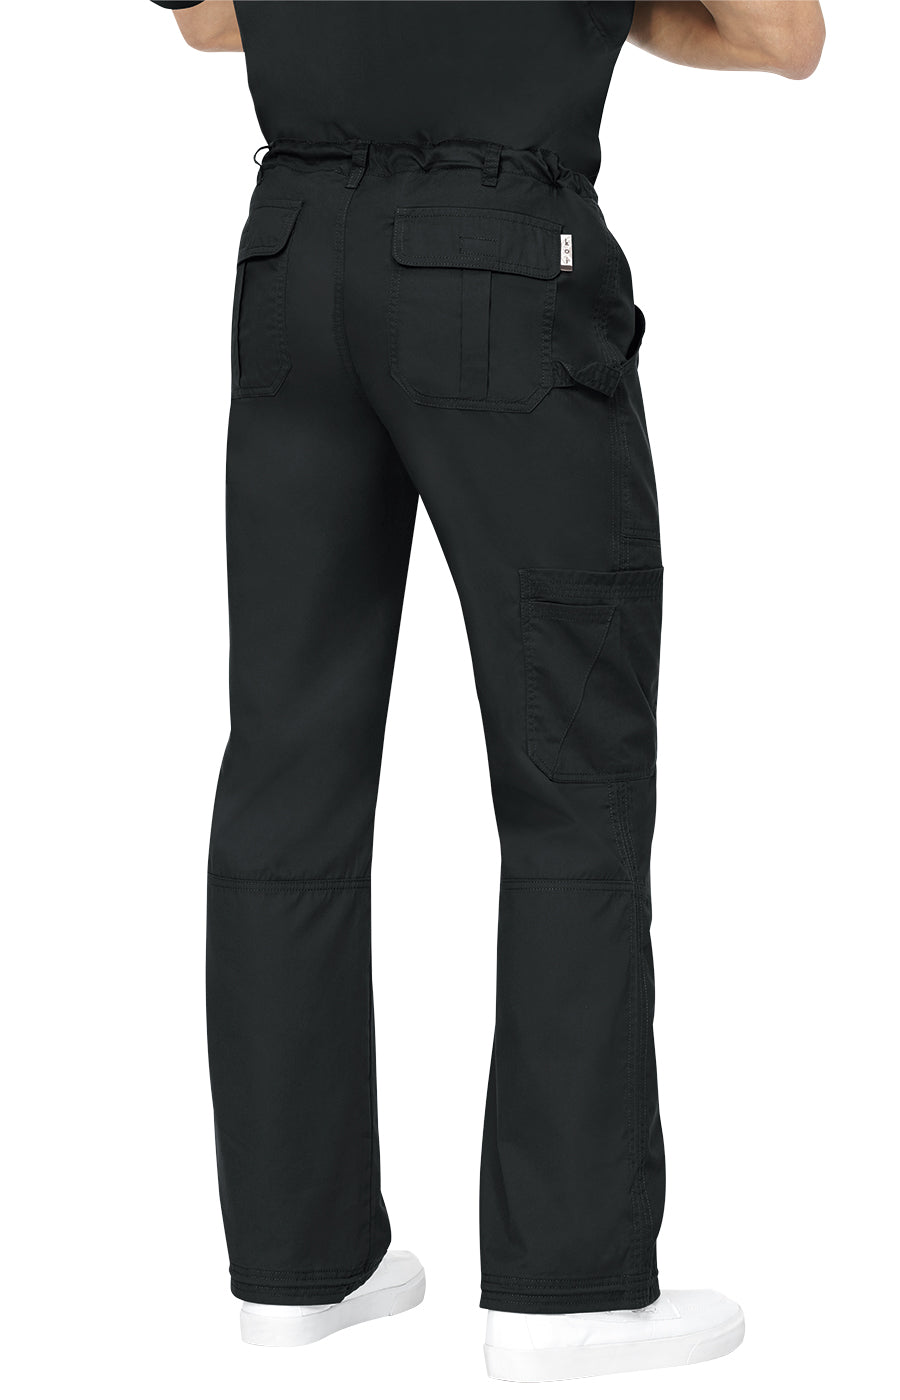 koi Classic James Pant - Men's 6-Pocket Cargo Scrub Pants Tall Men's Tall Scrub Pant Koi   